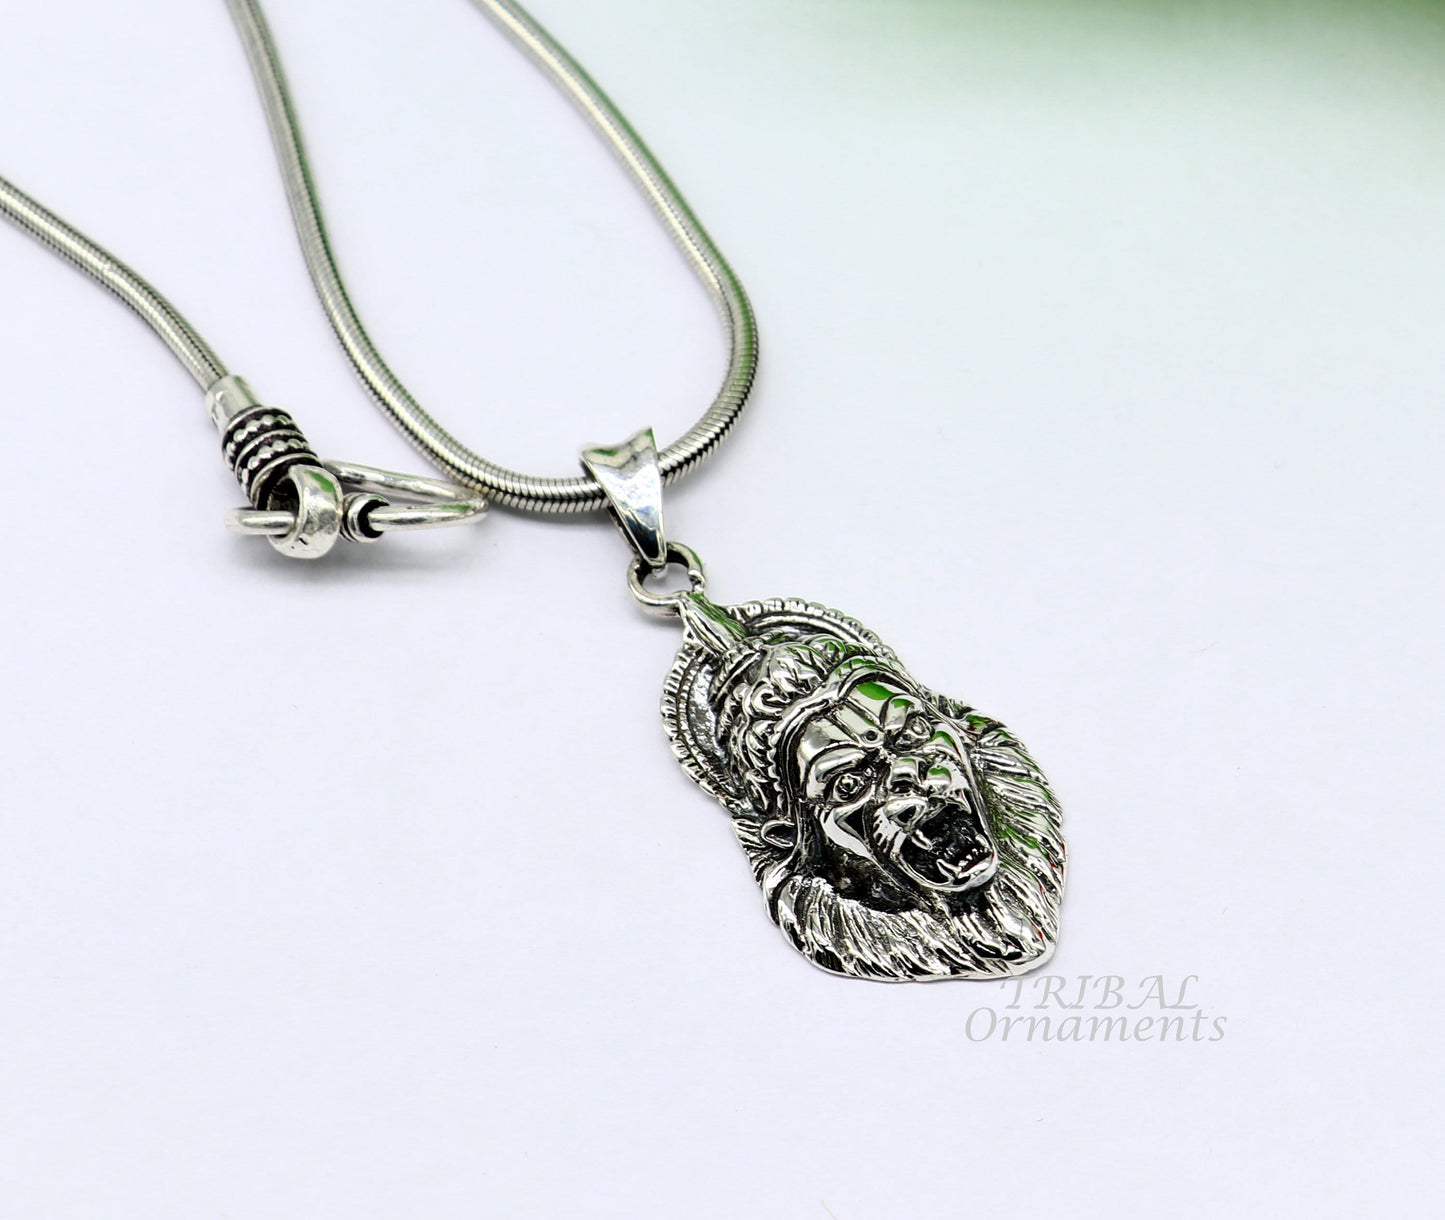 925 fine pure silver idol God Vishnu Narsimha pendant, stylish customized pendant, best gifting locket oxidized pendant necklace nsp551 - TRIBAL ORNAMENTS